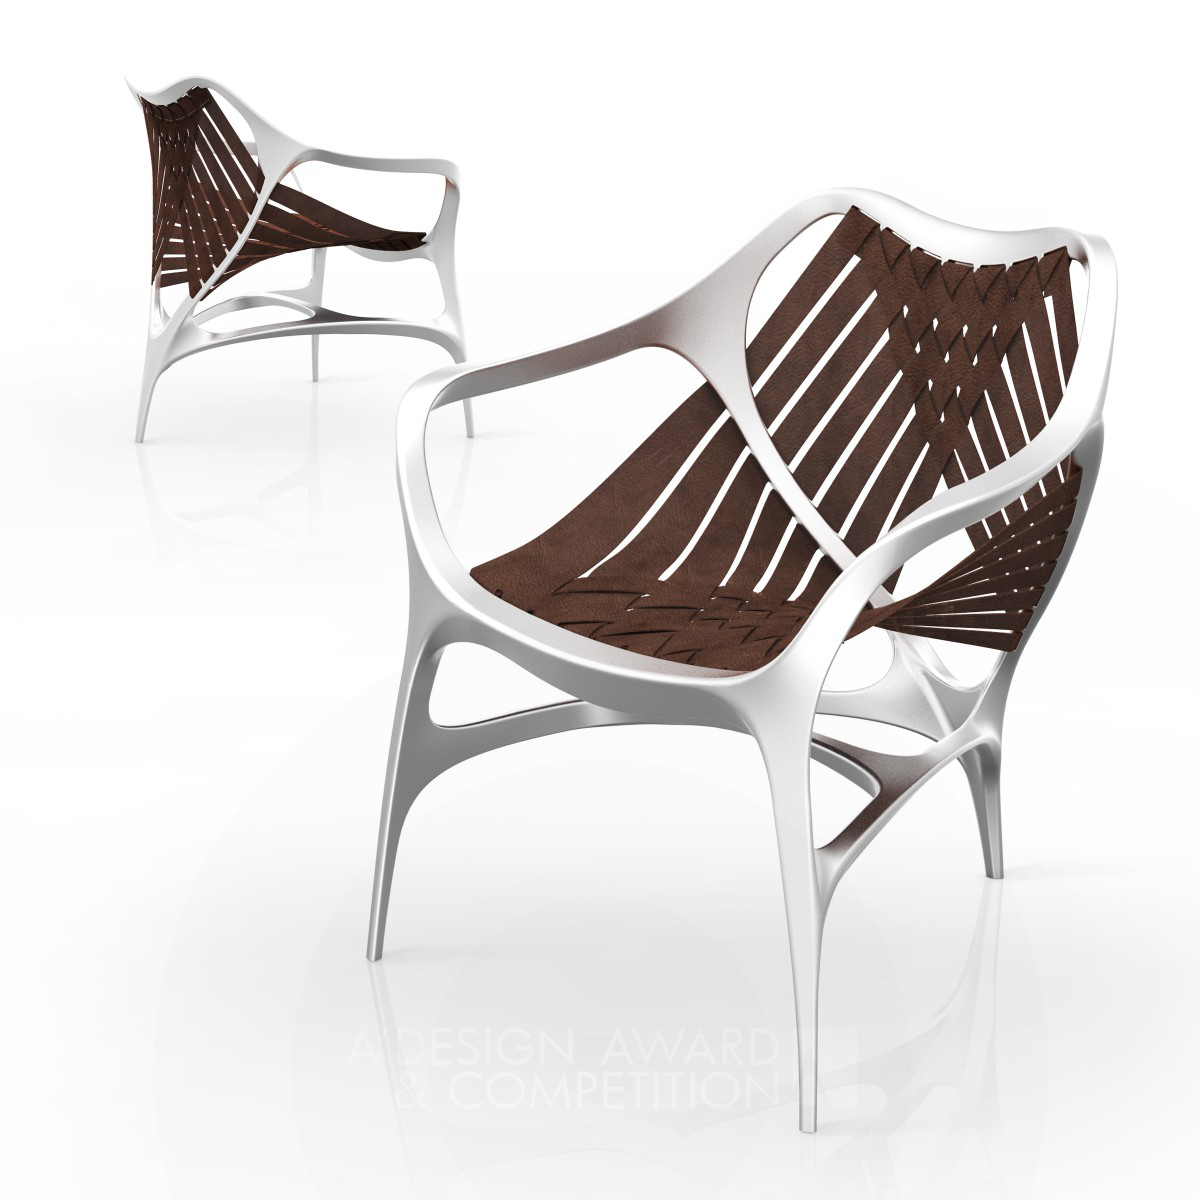 Manta Chair Bionic Design, Comfortable use by Wei Jingye